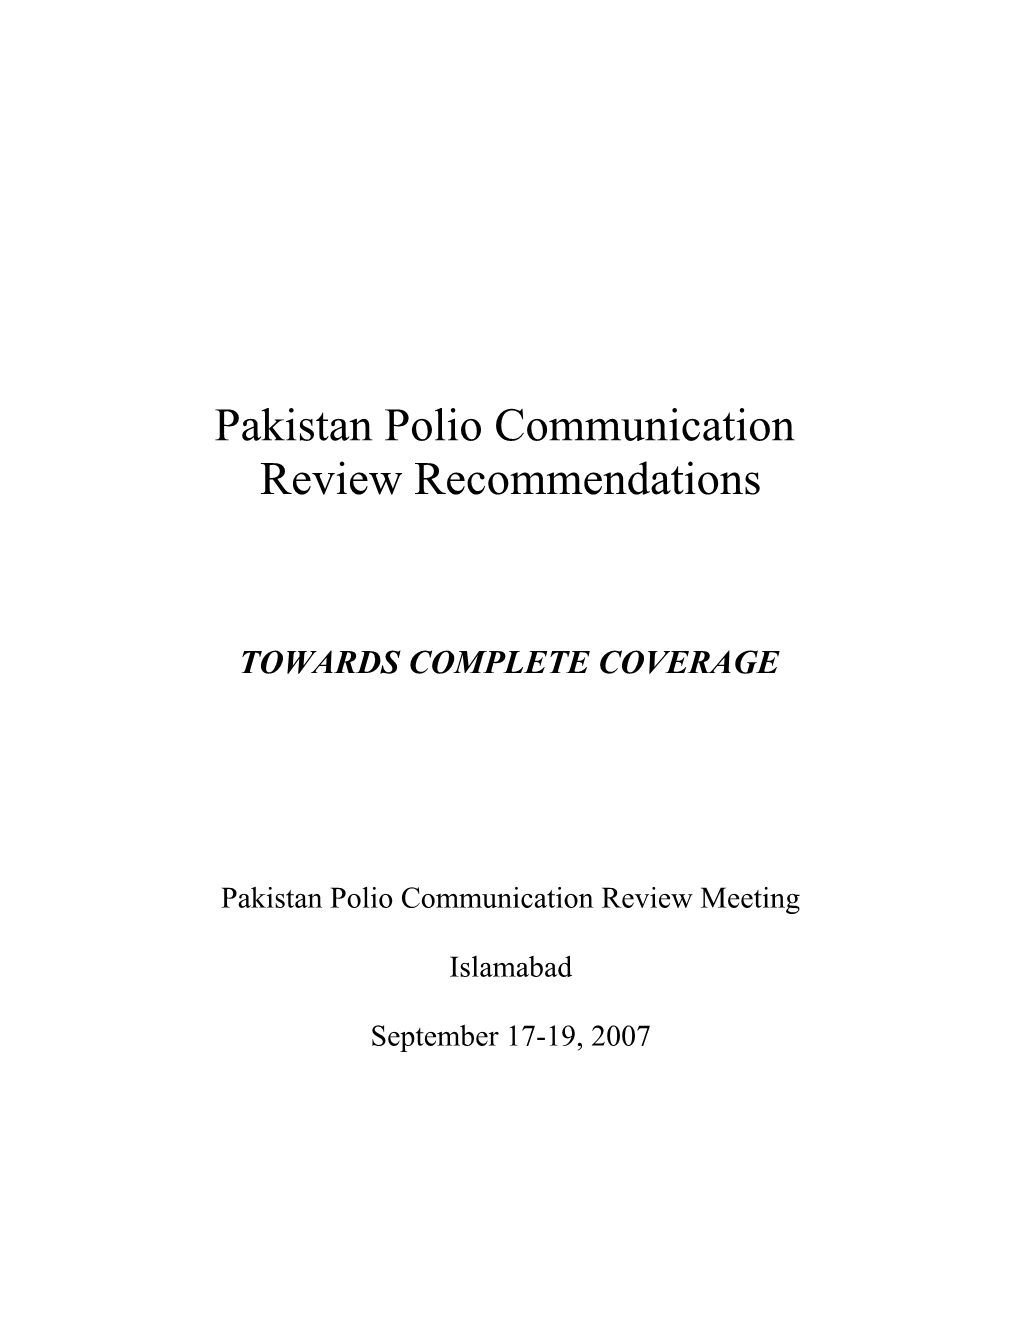 Polio Eradication Initiative (PEI) in Pakistan: 2007 Overview